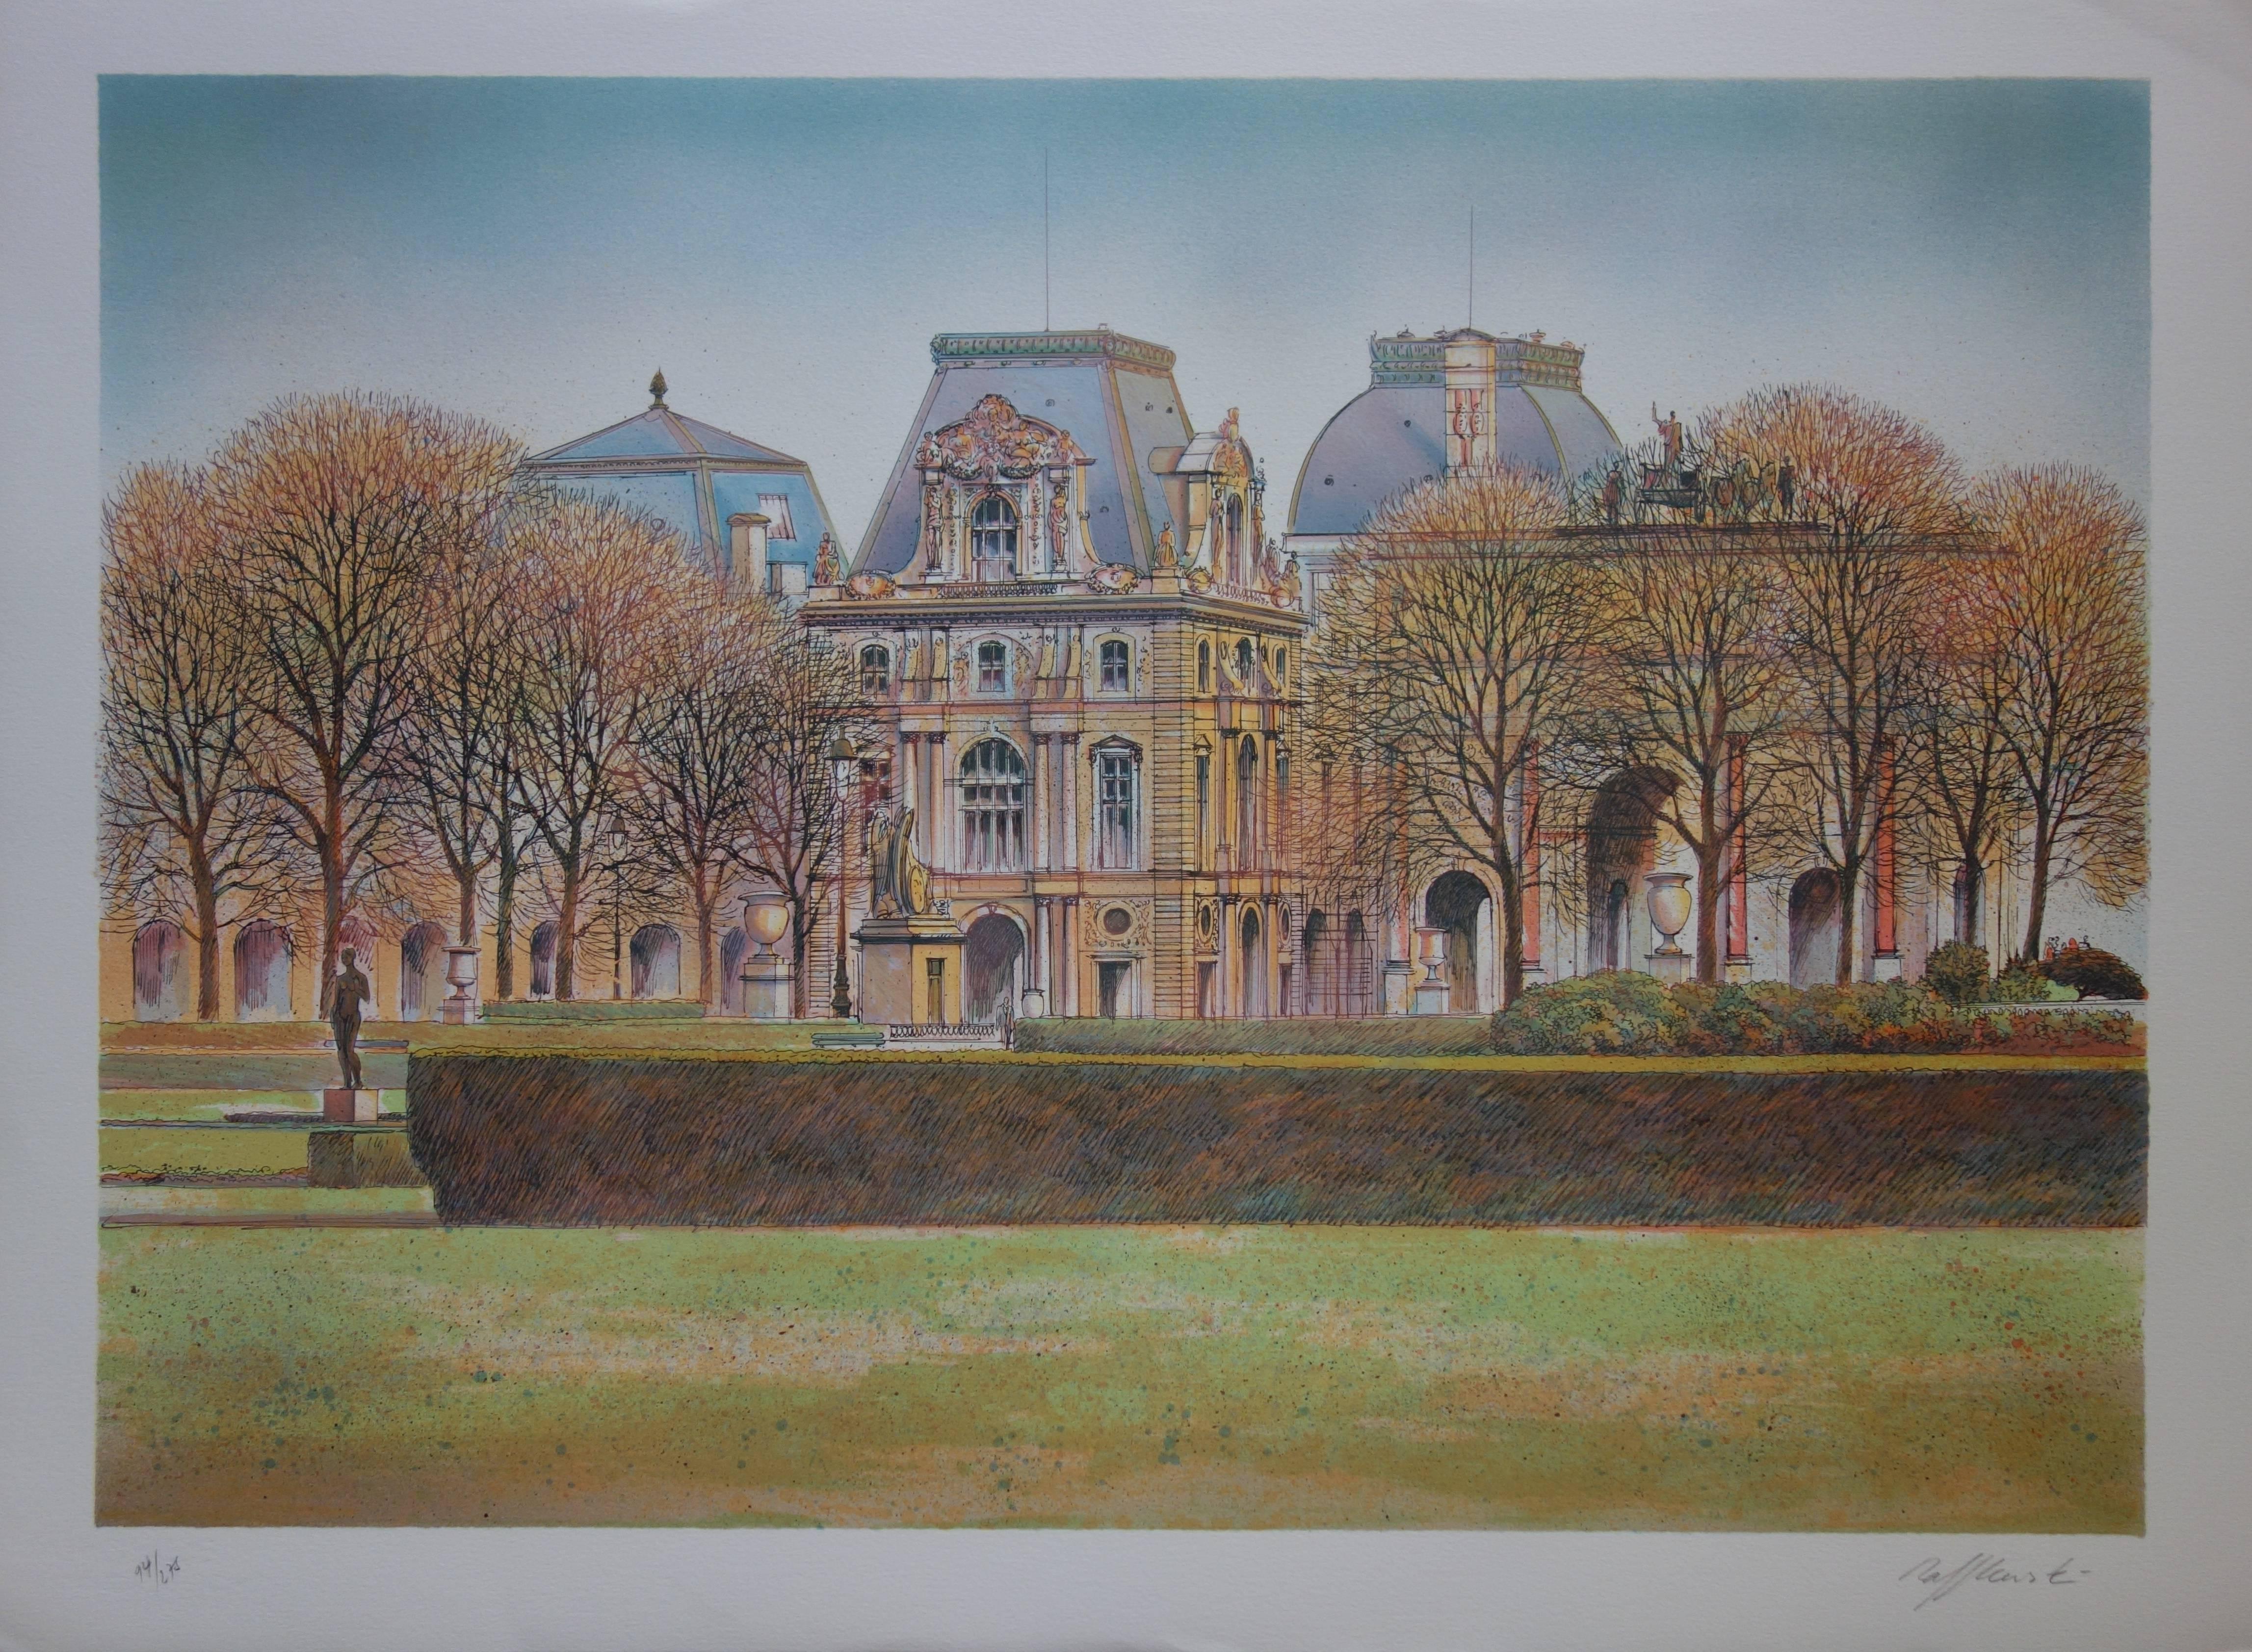 Rolf RAFFLEWSKI Landscape Print - Paris : Louvre Museum - Original handsigned lithograph - 275ex